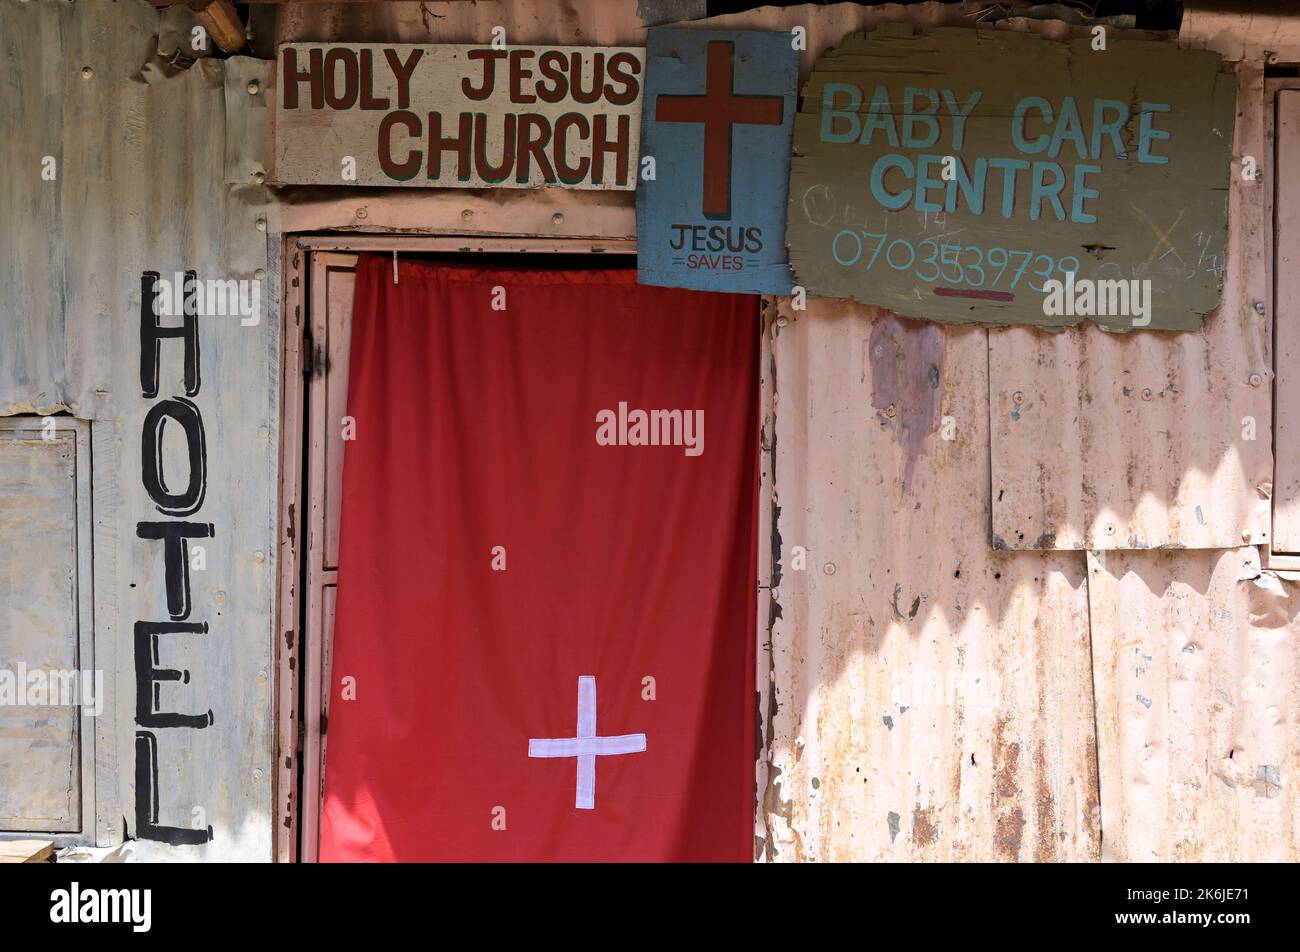 KENYA, Nairobi, Kibera slum, free church or pentecostal church Holy Jesus with baby care centre / KENIA, Nairobi, Slum Kibera, Pfingstkirche Holy Jesus Church Stock Photo